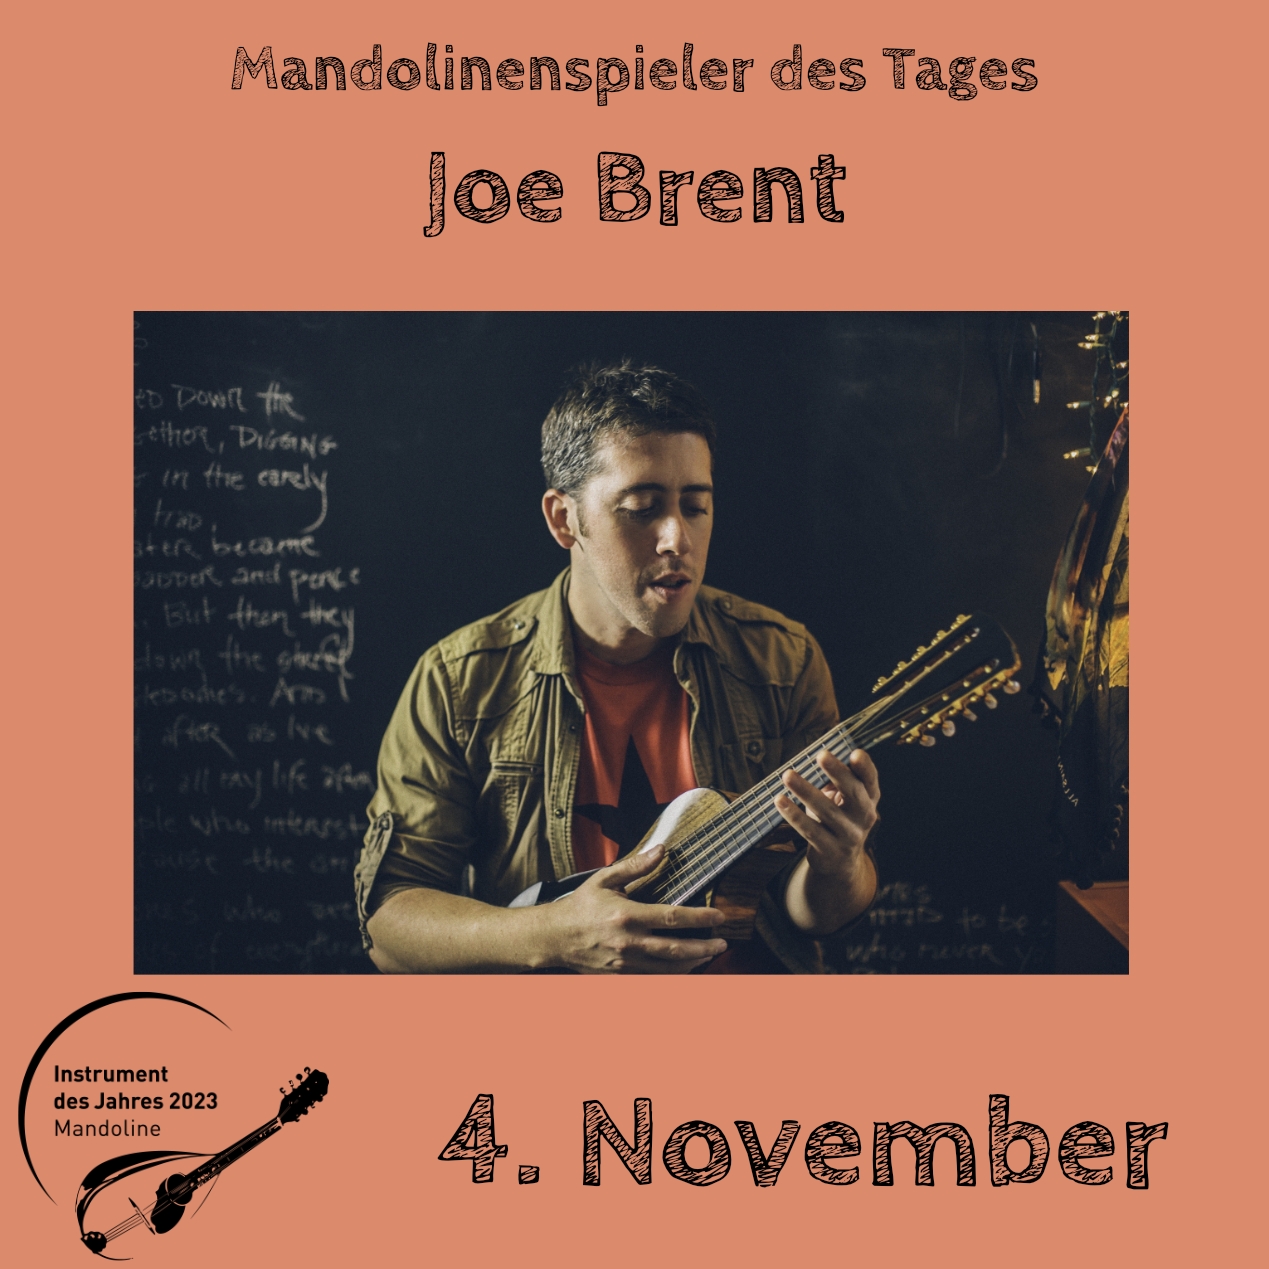 4. November - Joe Brent Instrument des Jahres 2023 Mandolinenspieler Mandolinenspielerin des Tages